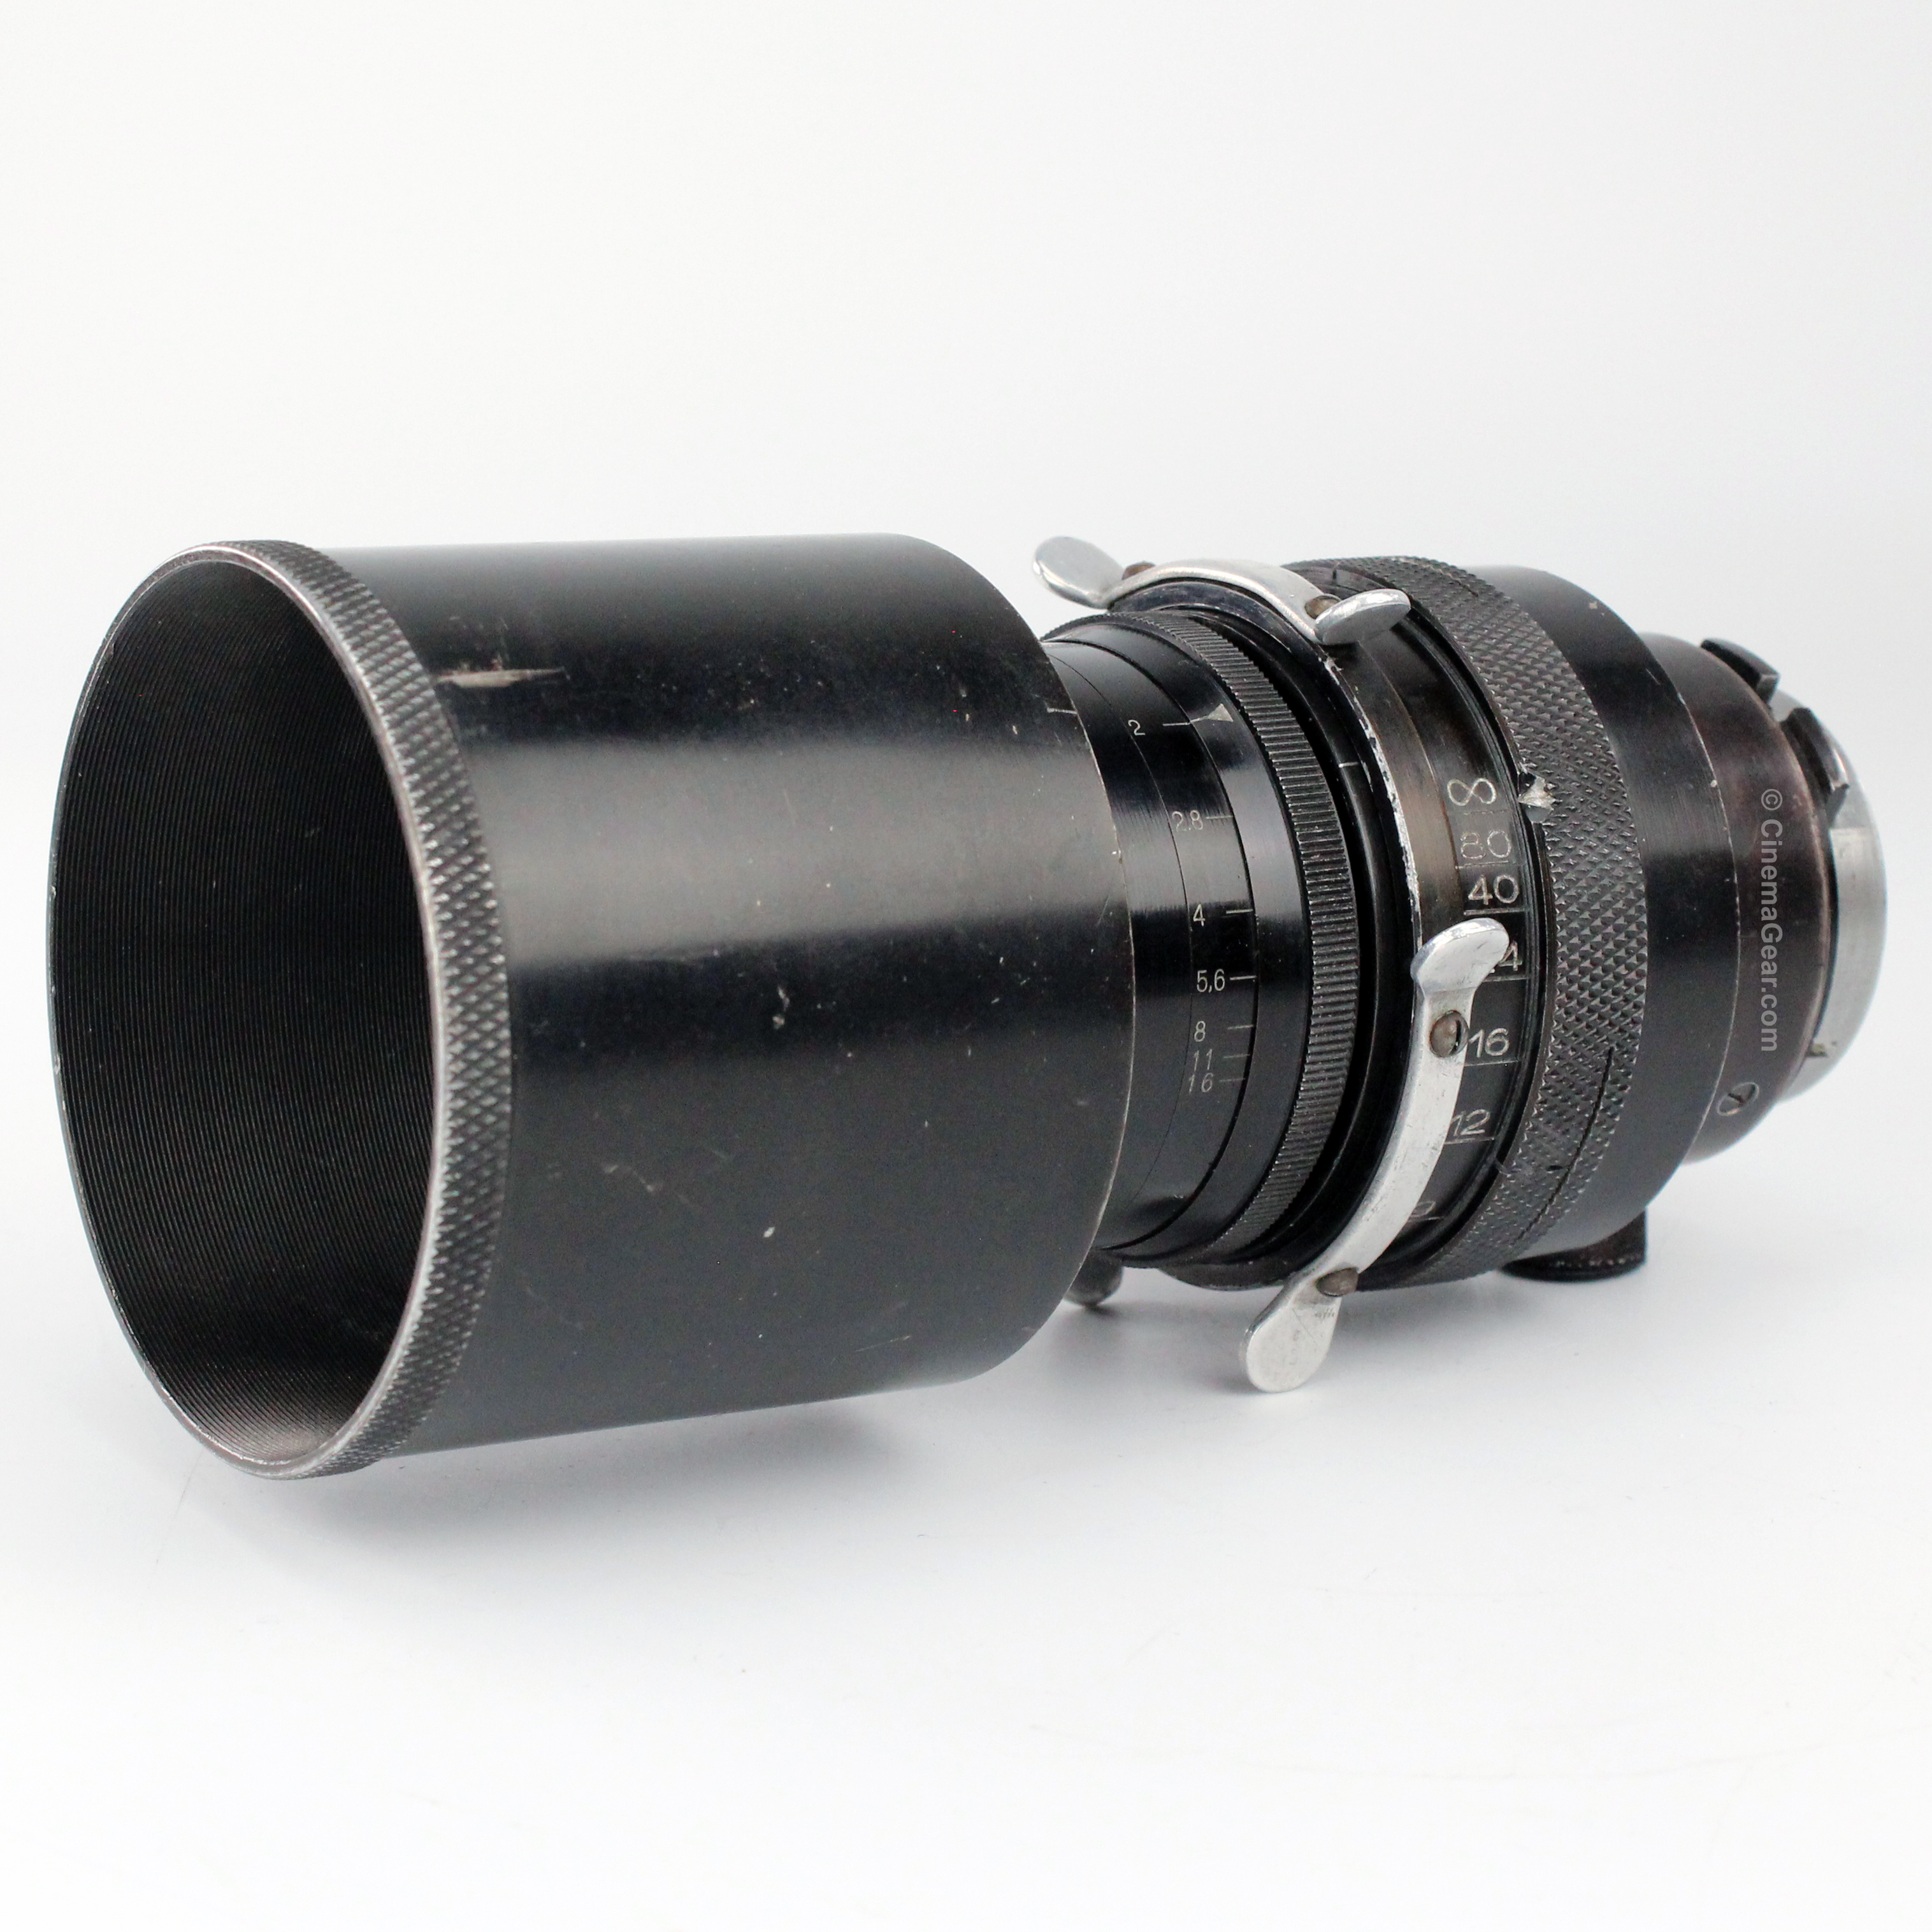 Kinoptik Apochromat 75mm f2 lens in Eclair CM3 mount.